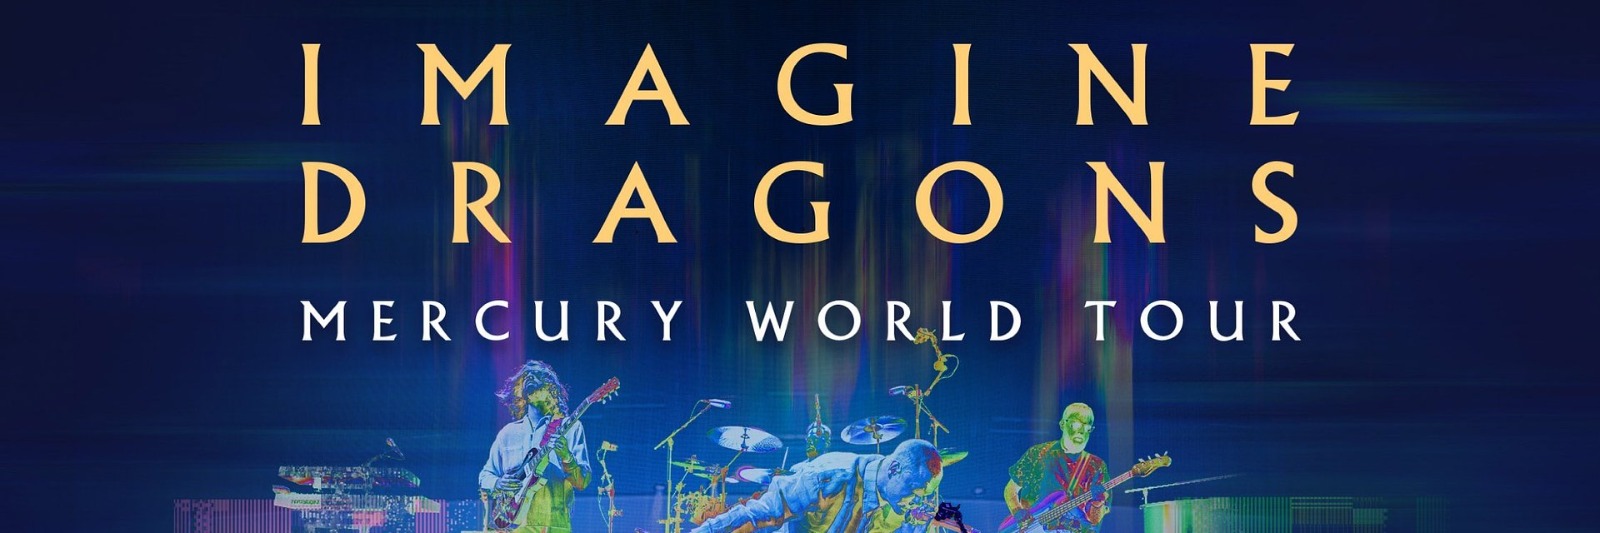 Imagine Dragons llevará su "Mercury World Tour" a Monterrey en mayo 2023 2